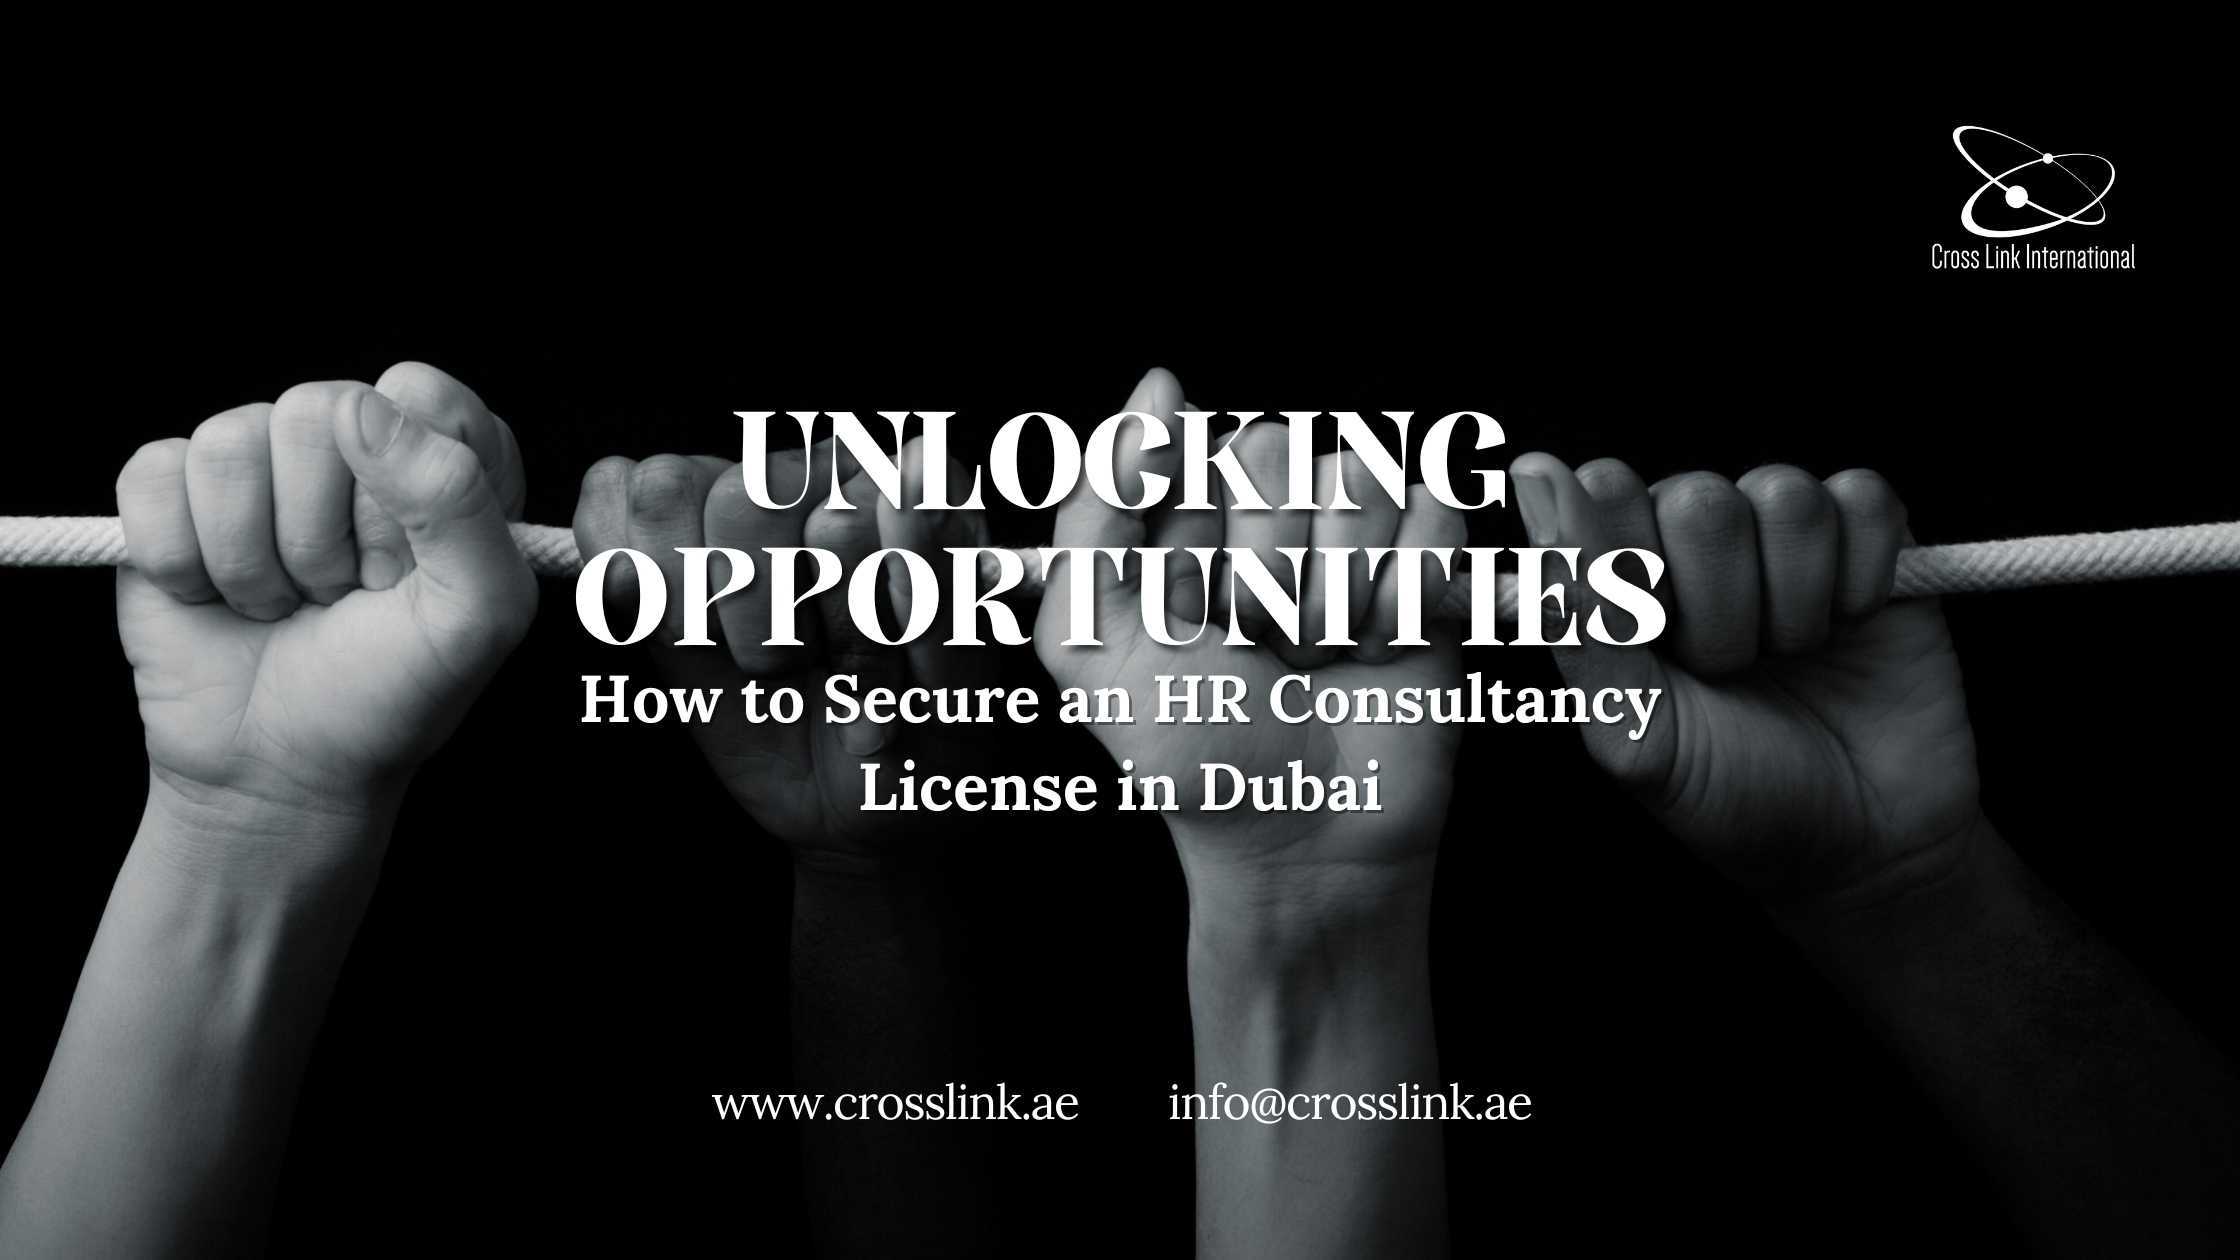 HR consultancy license in Dubai